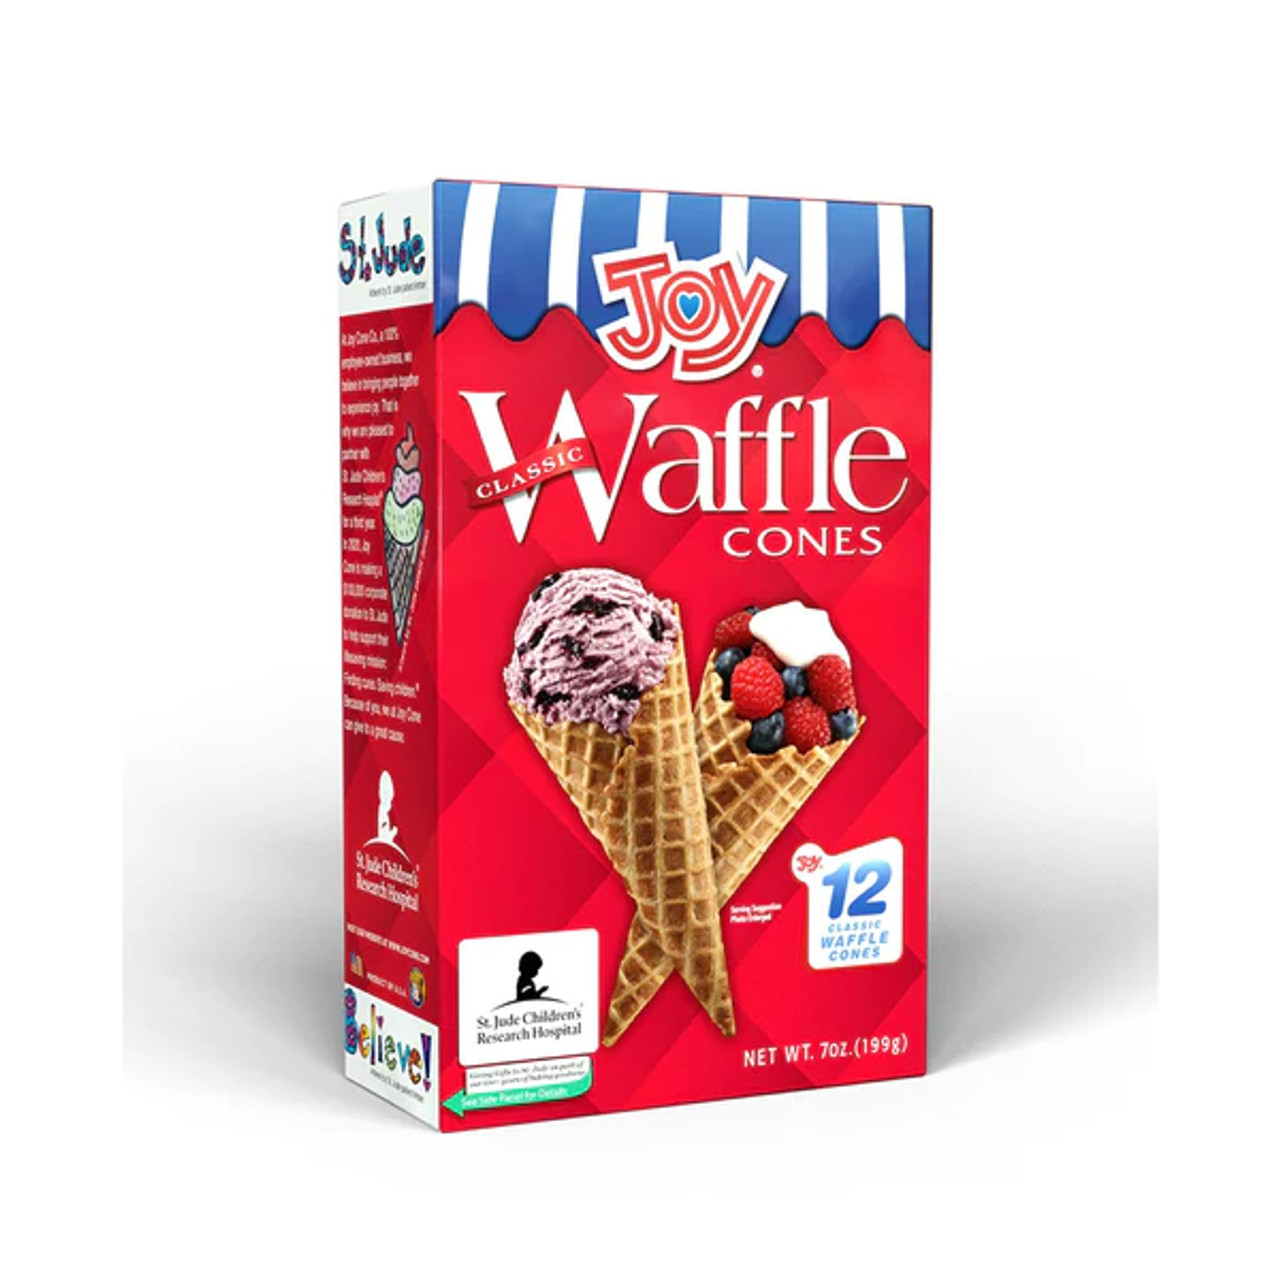 Frostline Vanilla Soft Serve Ice Cream Mix Lactose Free 6 lbs | Waffle Cones 12pk & Rainbow Sprinkles